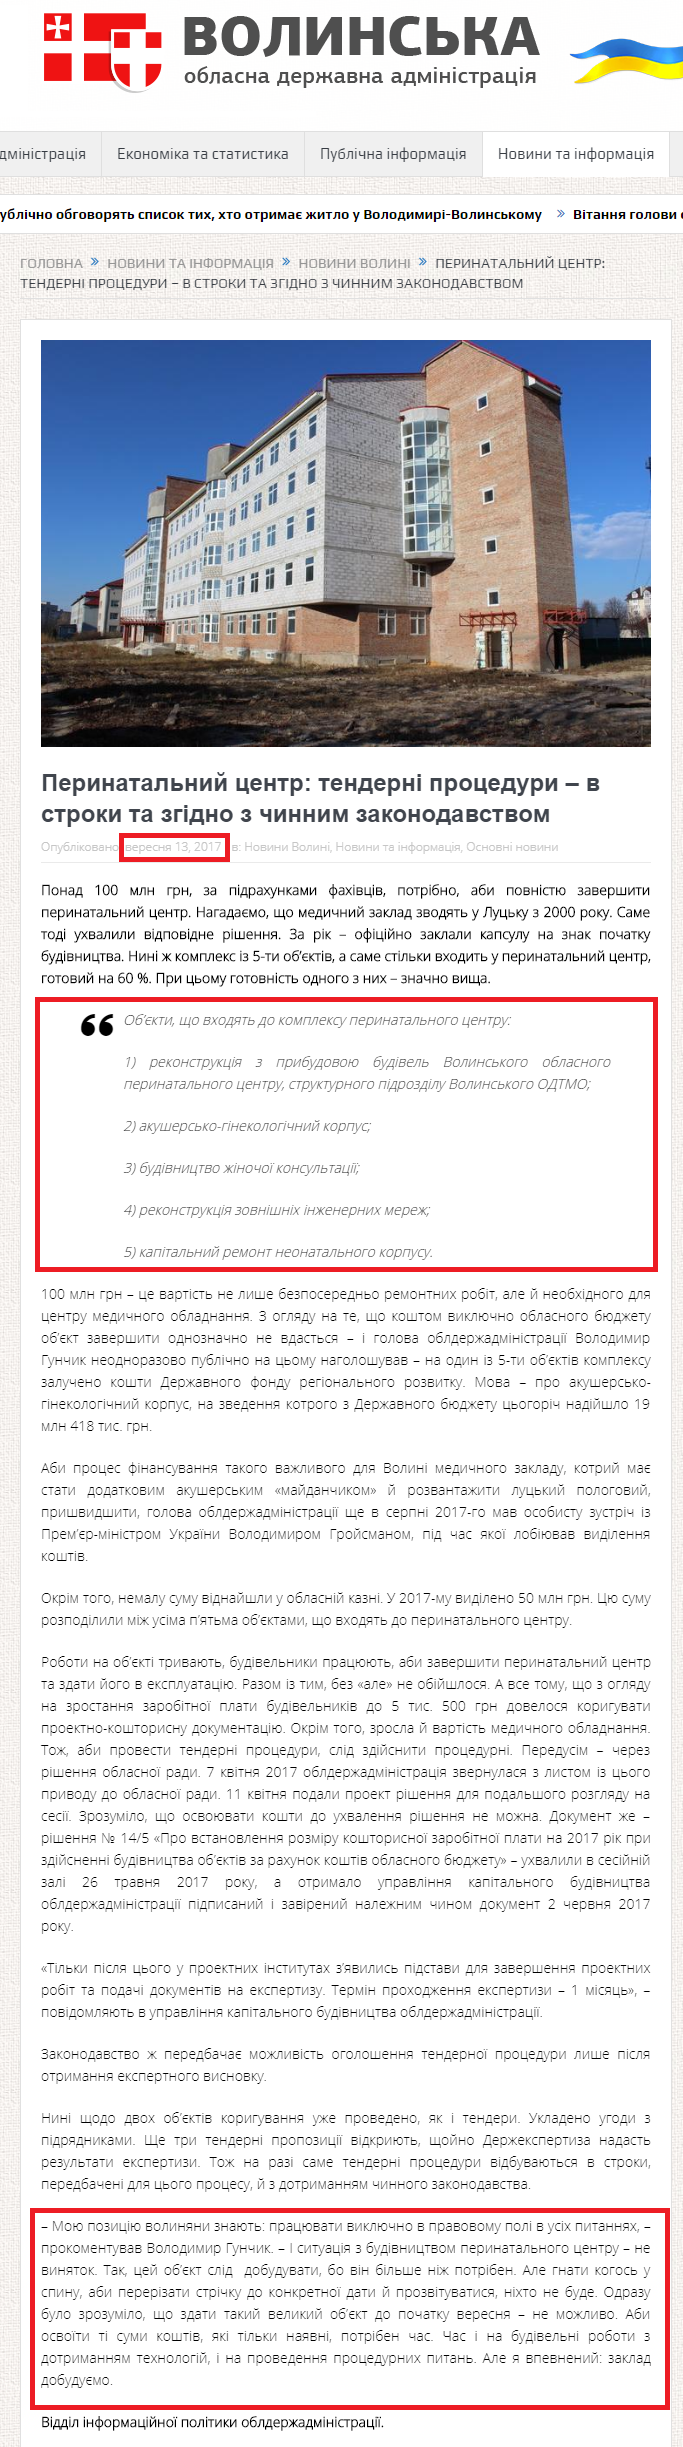 http://voladm.gov.ua/perinatalnij-centr-tenderni-proceduri-v-stroki-ta-zgidno-z-chinnim-zakonodavstvom/